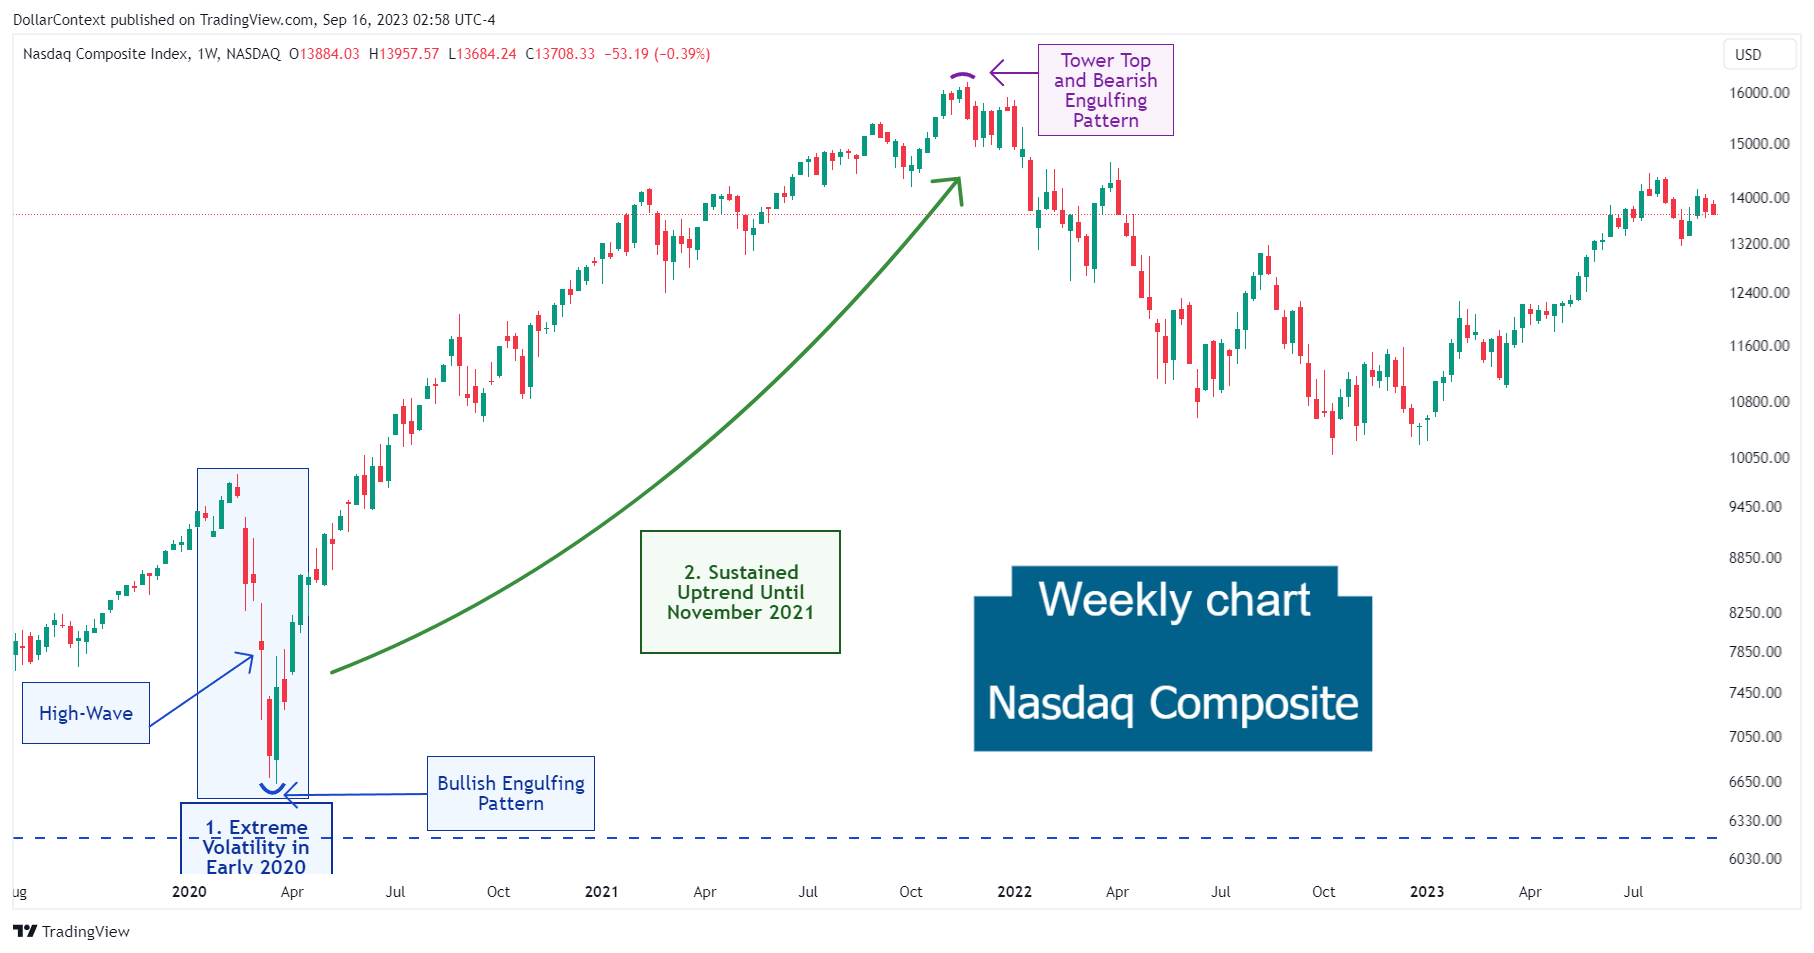 Nasdaq Composite: Sustained Uptrend Until November 2021 (Weekly Chart)